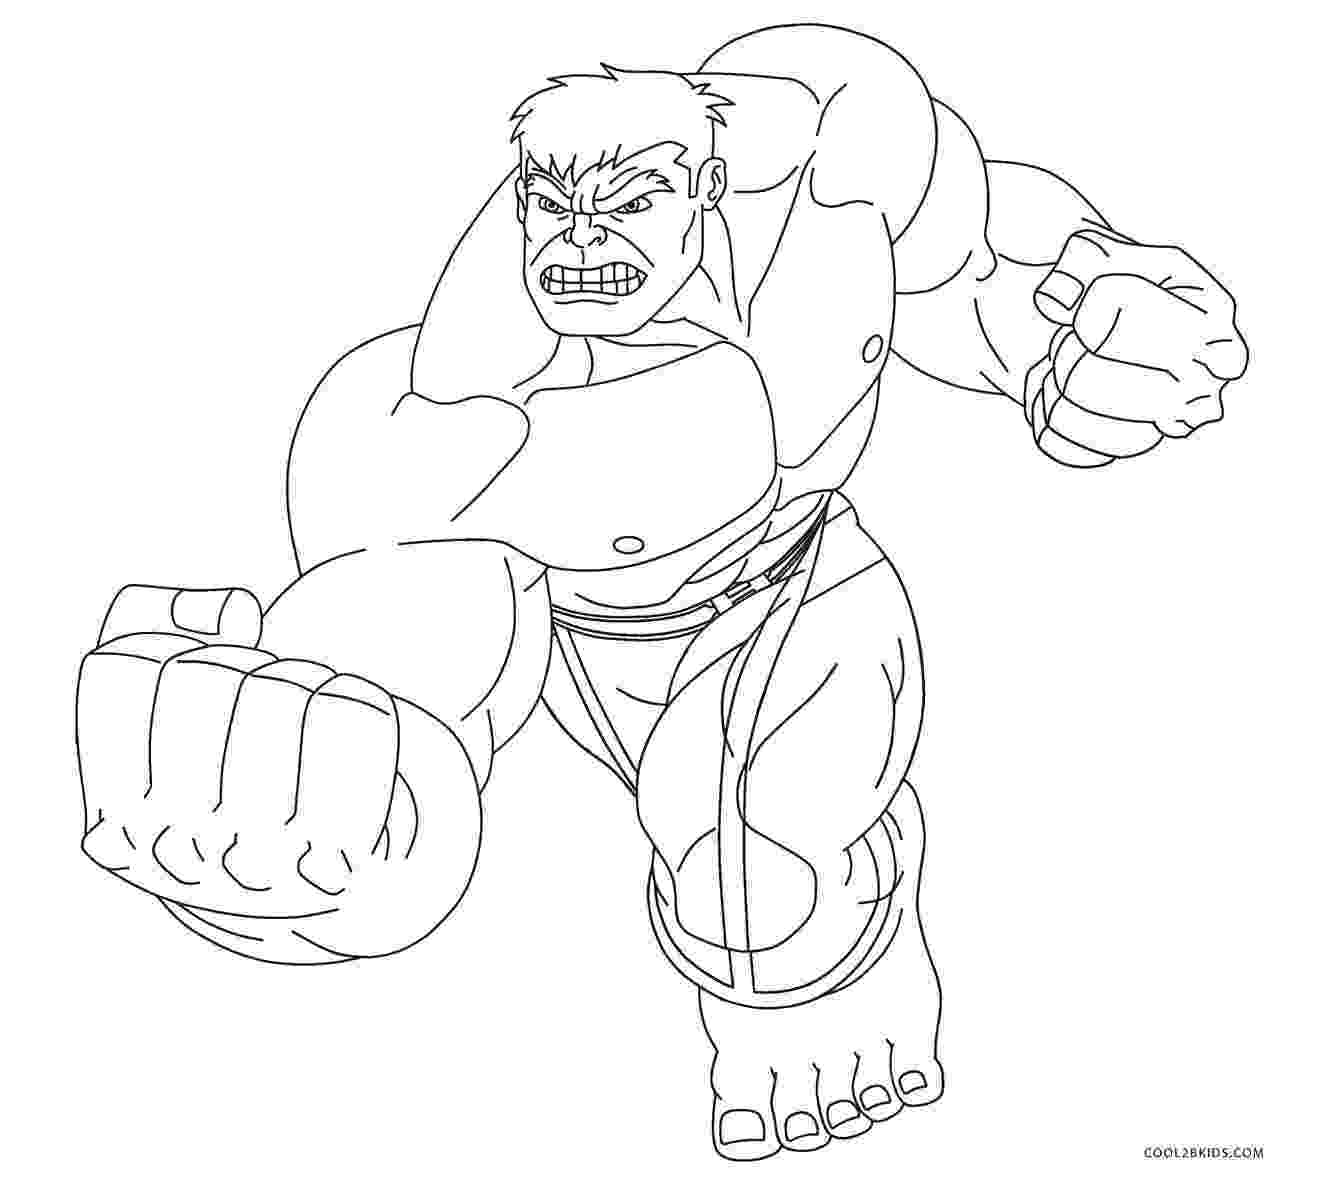 hulk coloring pages to print free hulk cartoon drawing at getdrawingscom free for pages to coloring free hulk print 